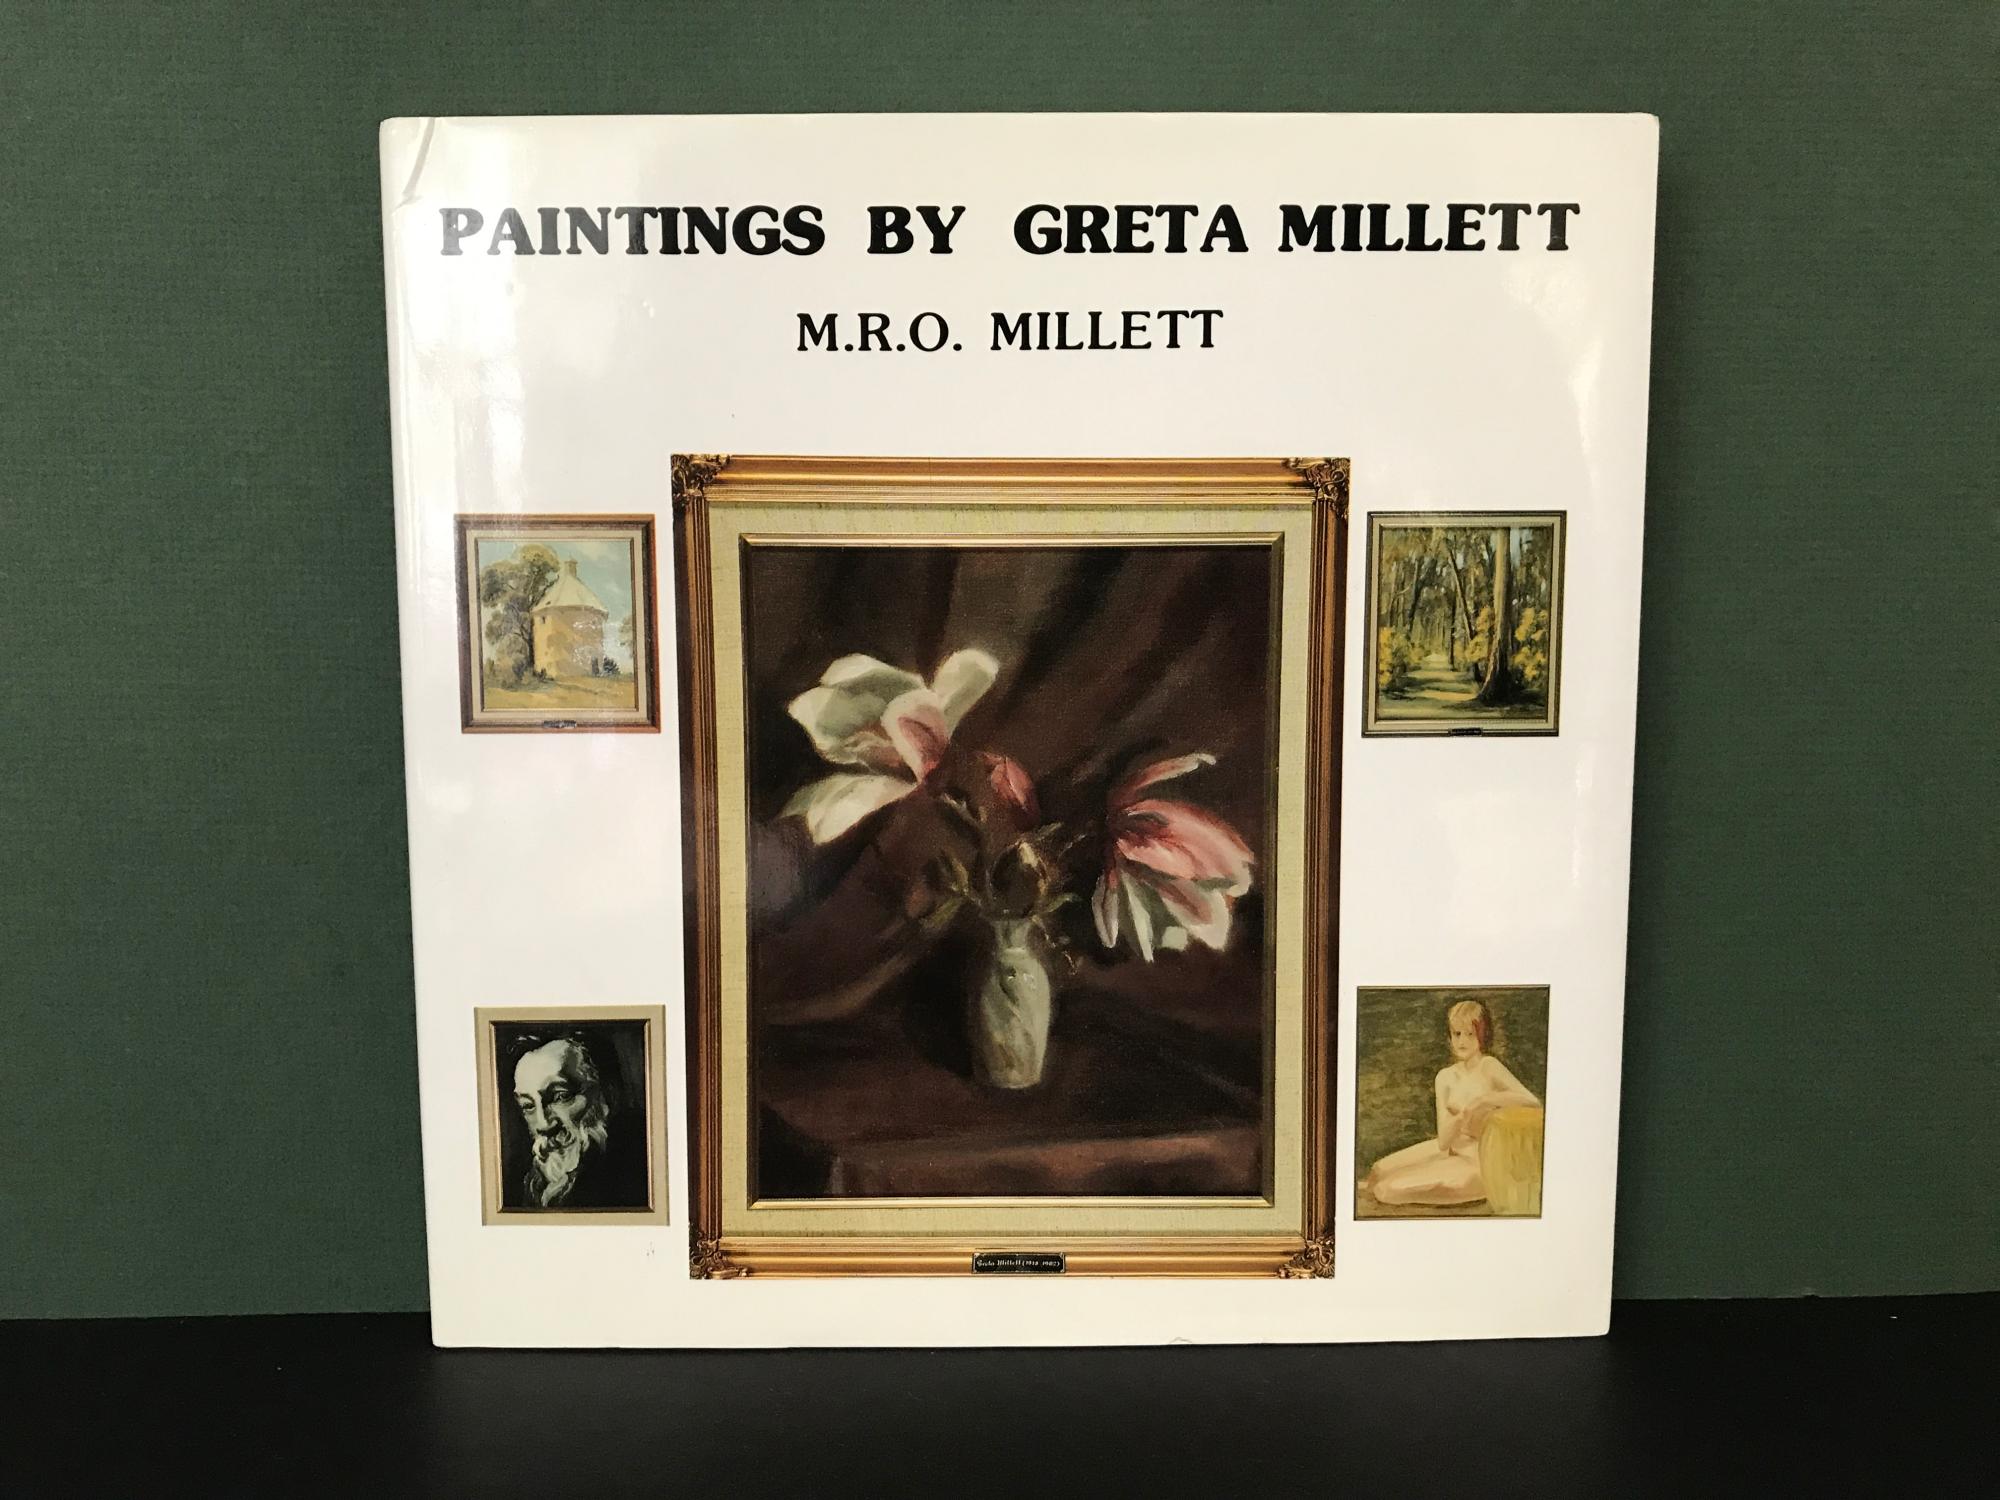 Paintings by Greta Millett - Millett, M.R.O. (Greta Millett)